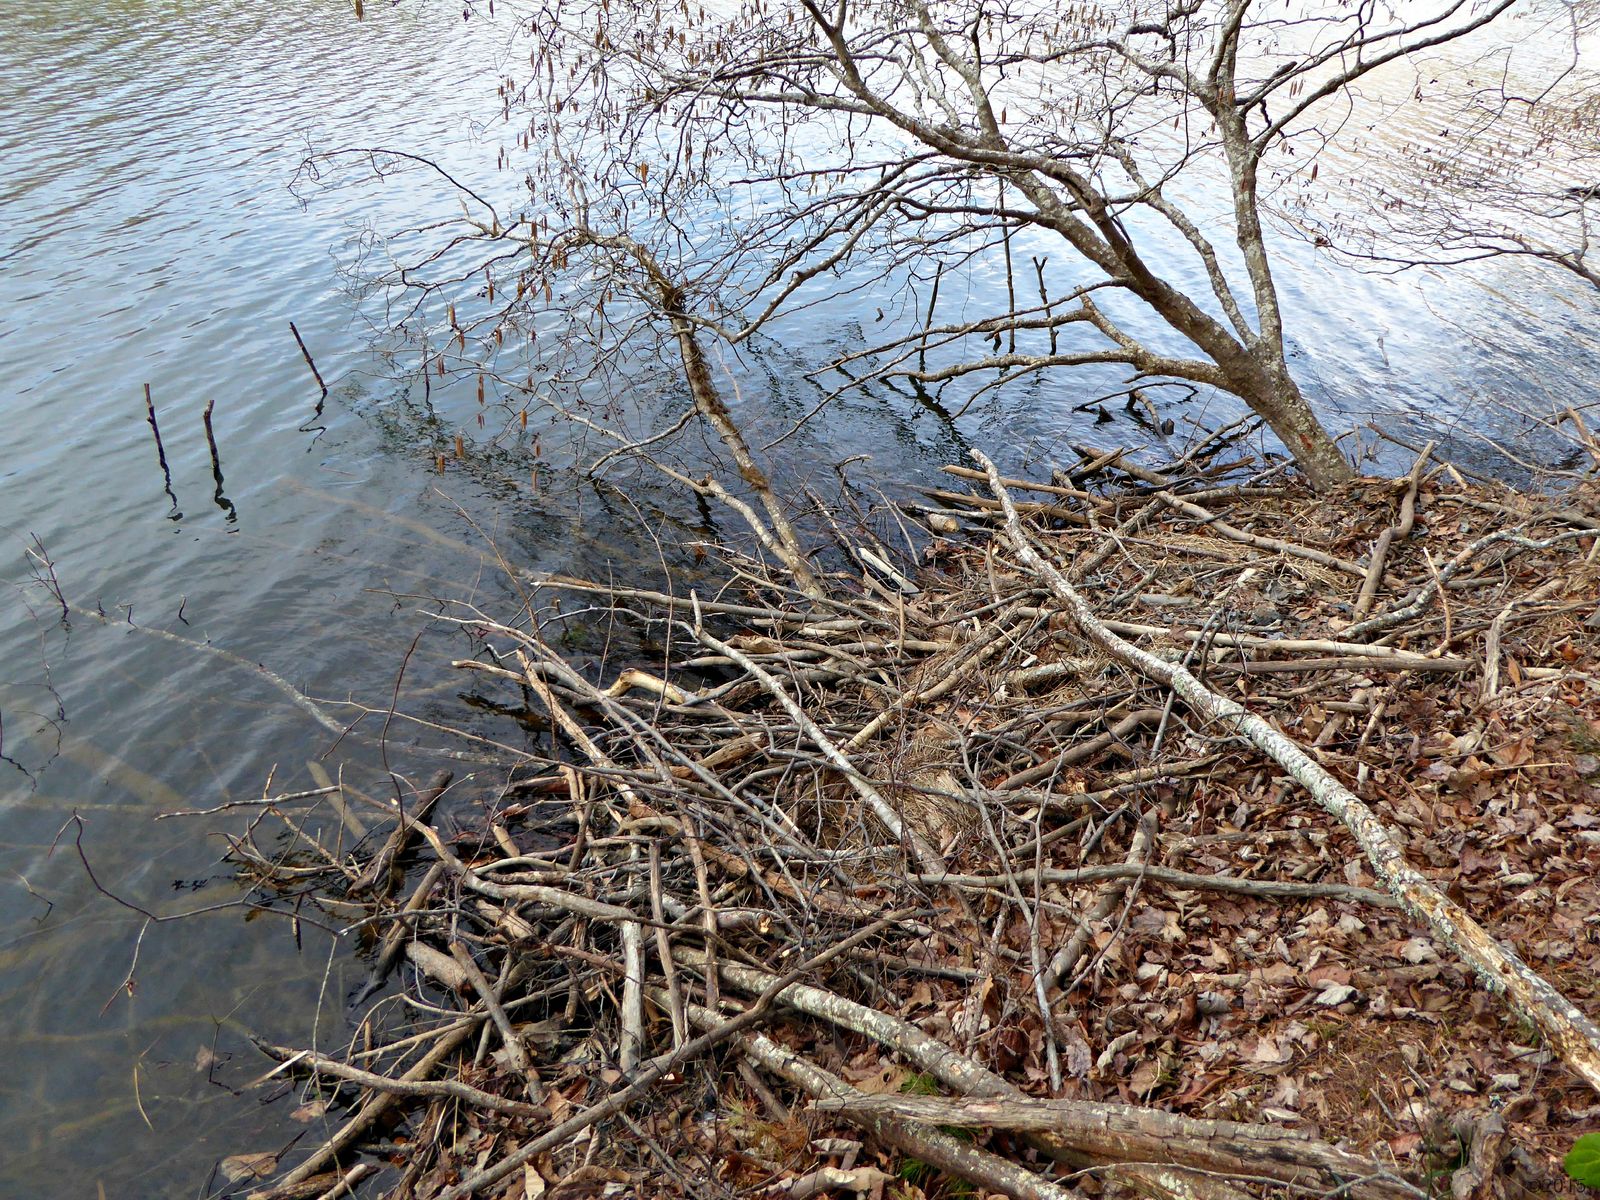 February 14, 2015 - Beaver trap and beaver lodge along the shore of Lake Tamarack